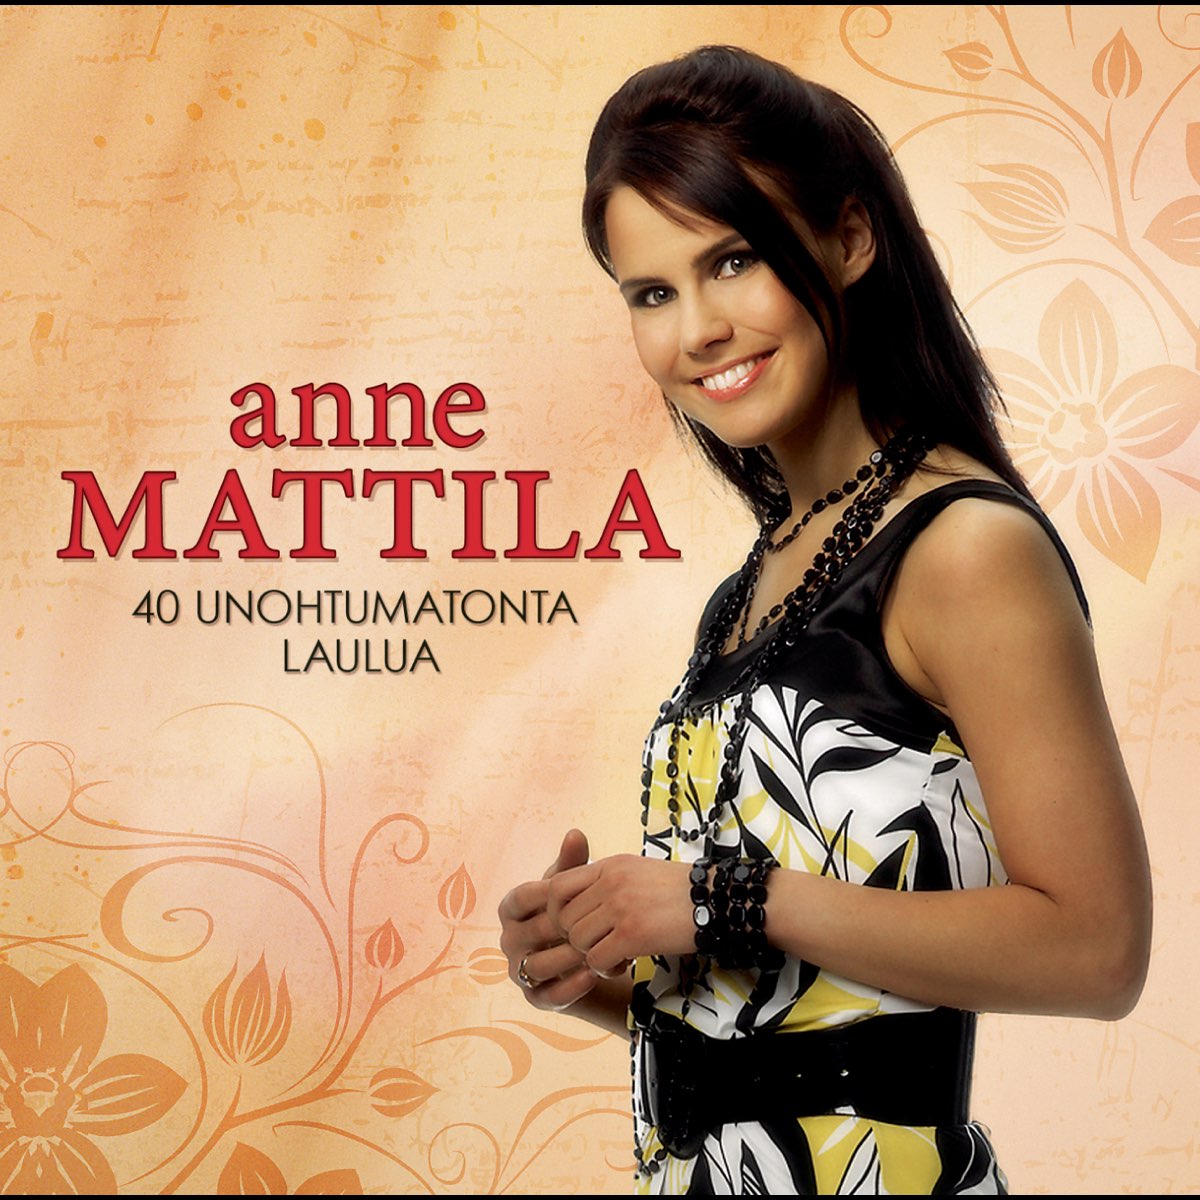 40 Unohtumatonta laulua by Anne Mattila on Apple Music